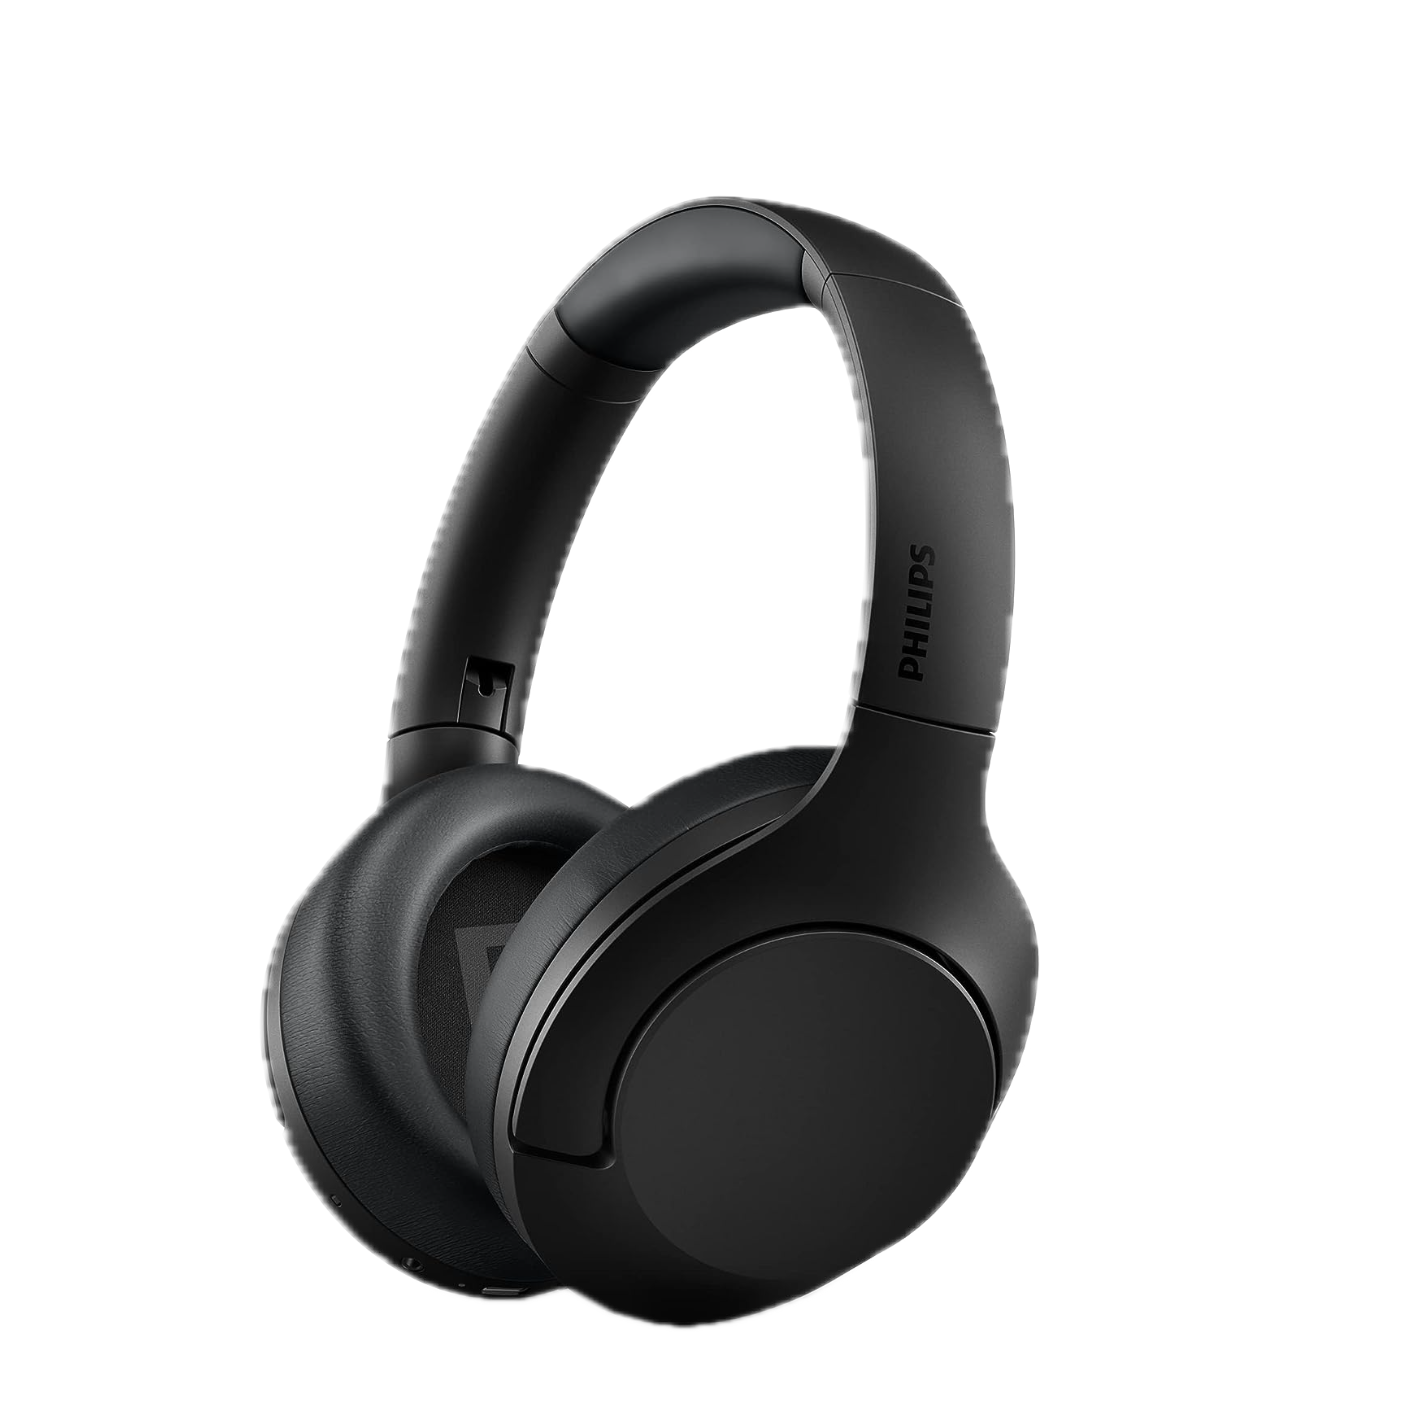 Philips H8506 over-ear headphones in black